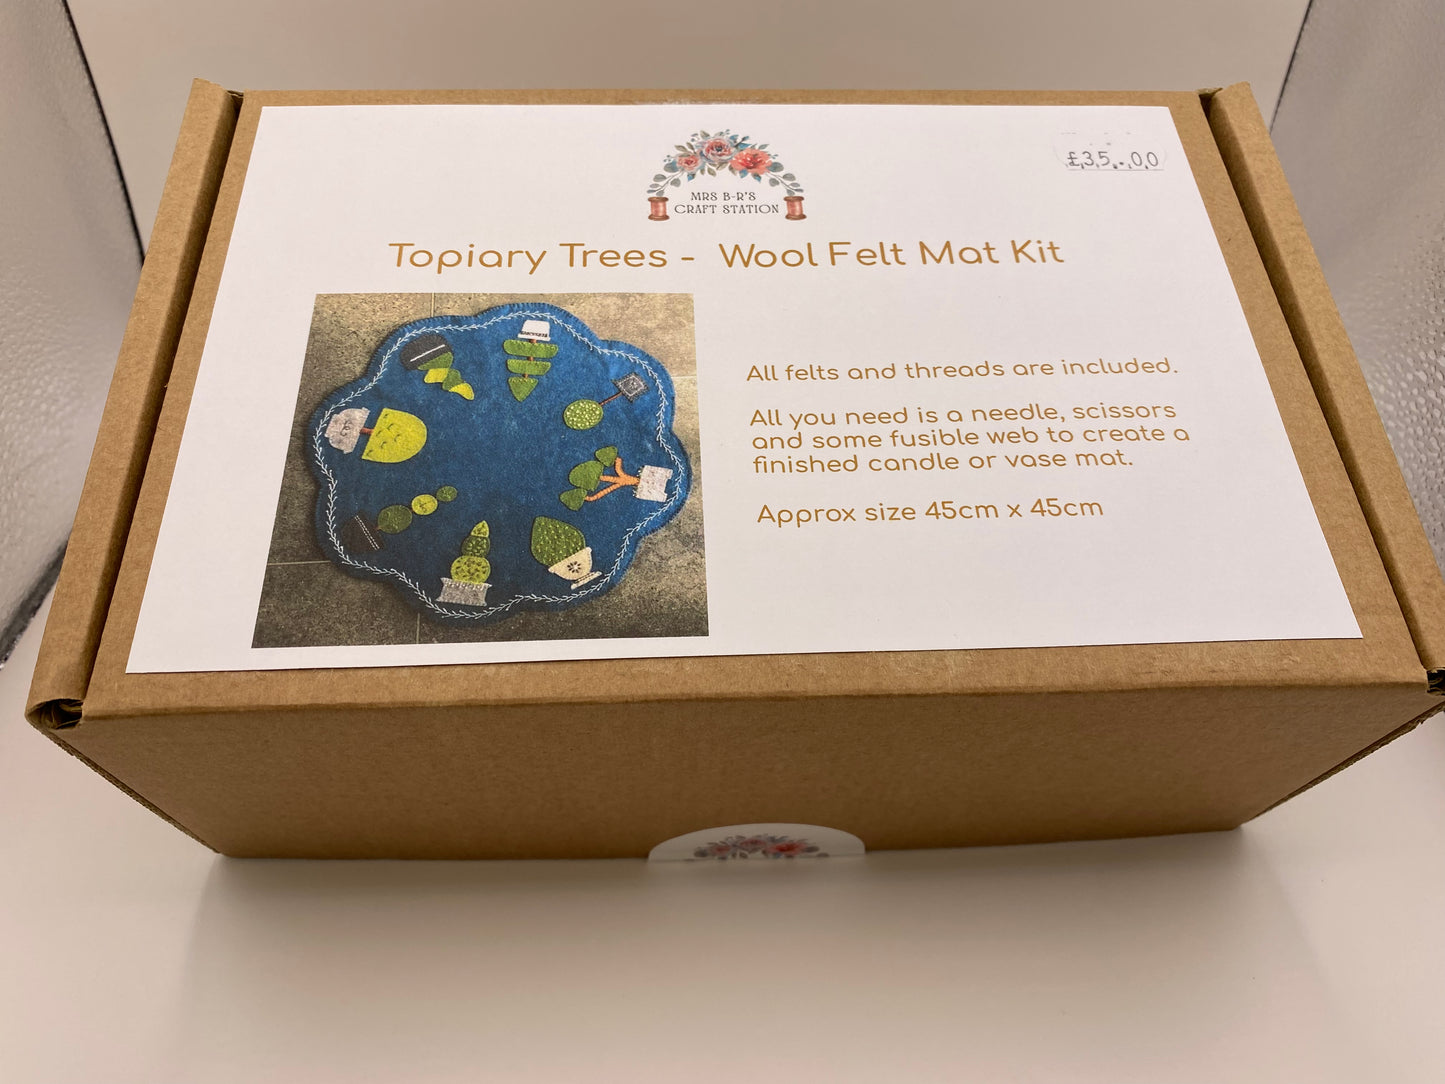 Topiary Trees - Wool Felt Mat Kit